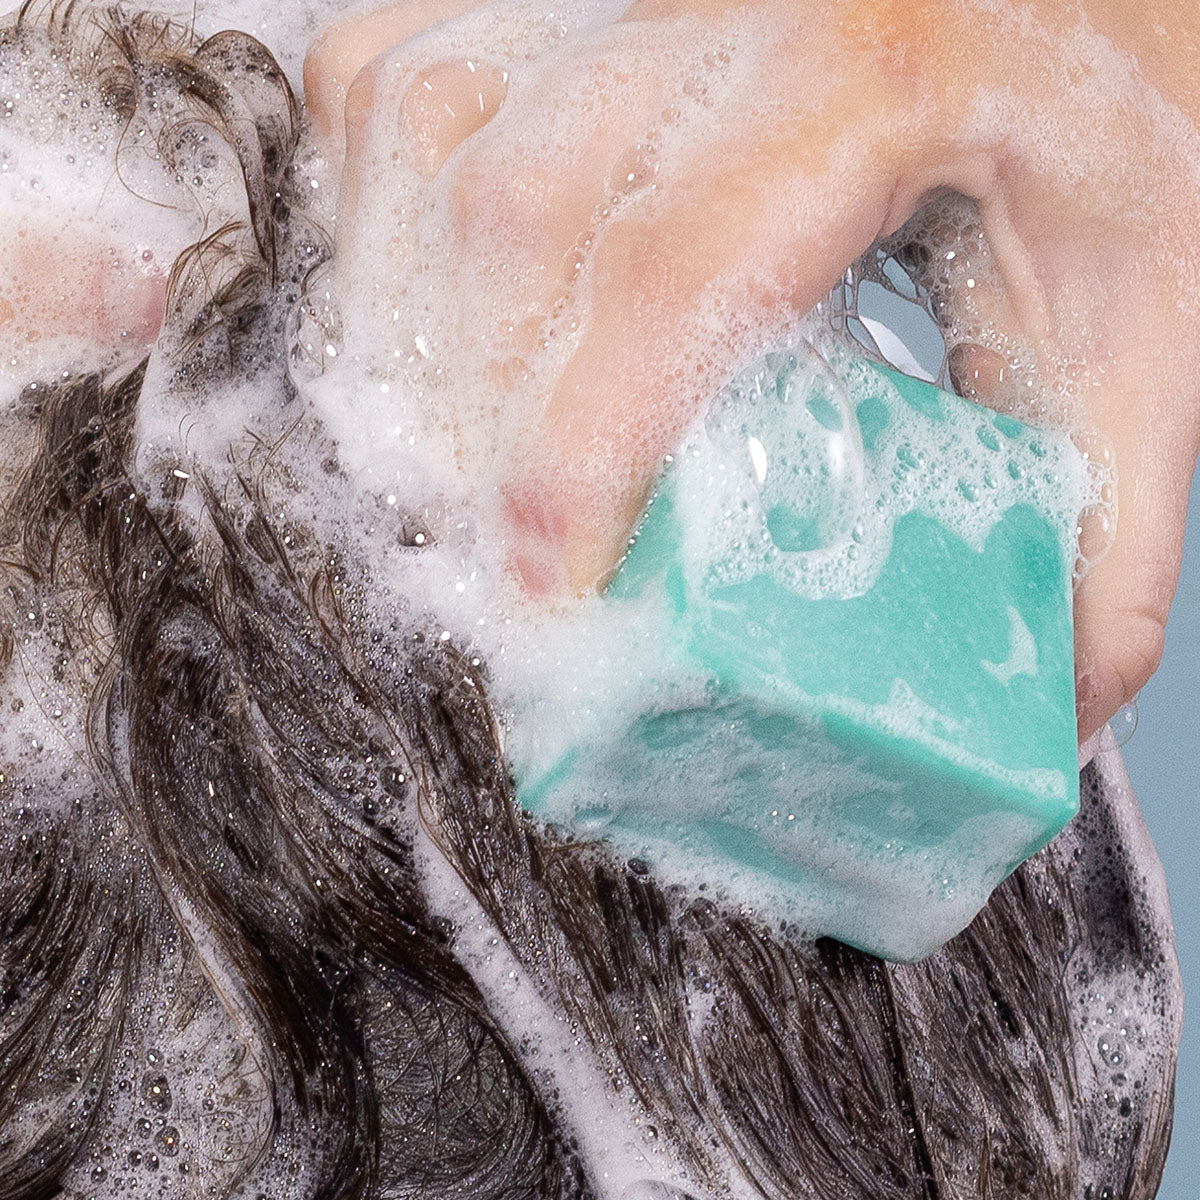 Replenishing Shampoo Bar for Dry Hair: Mintasy™